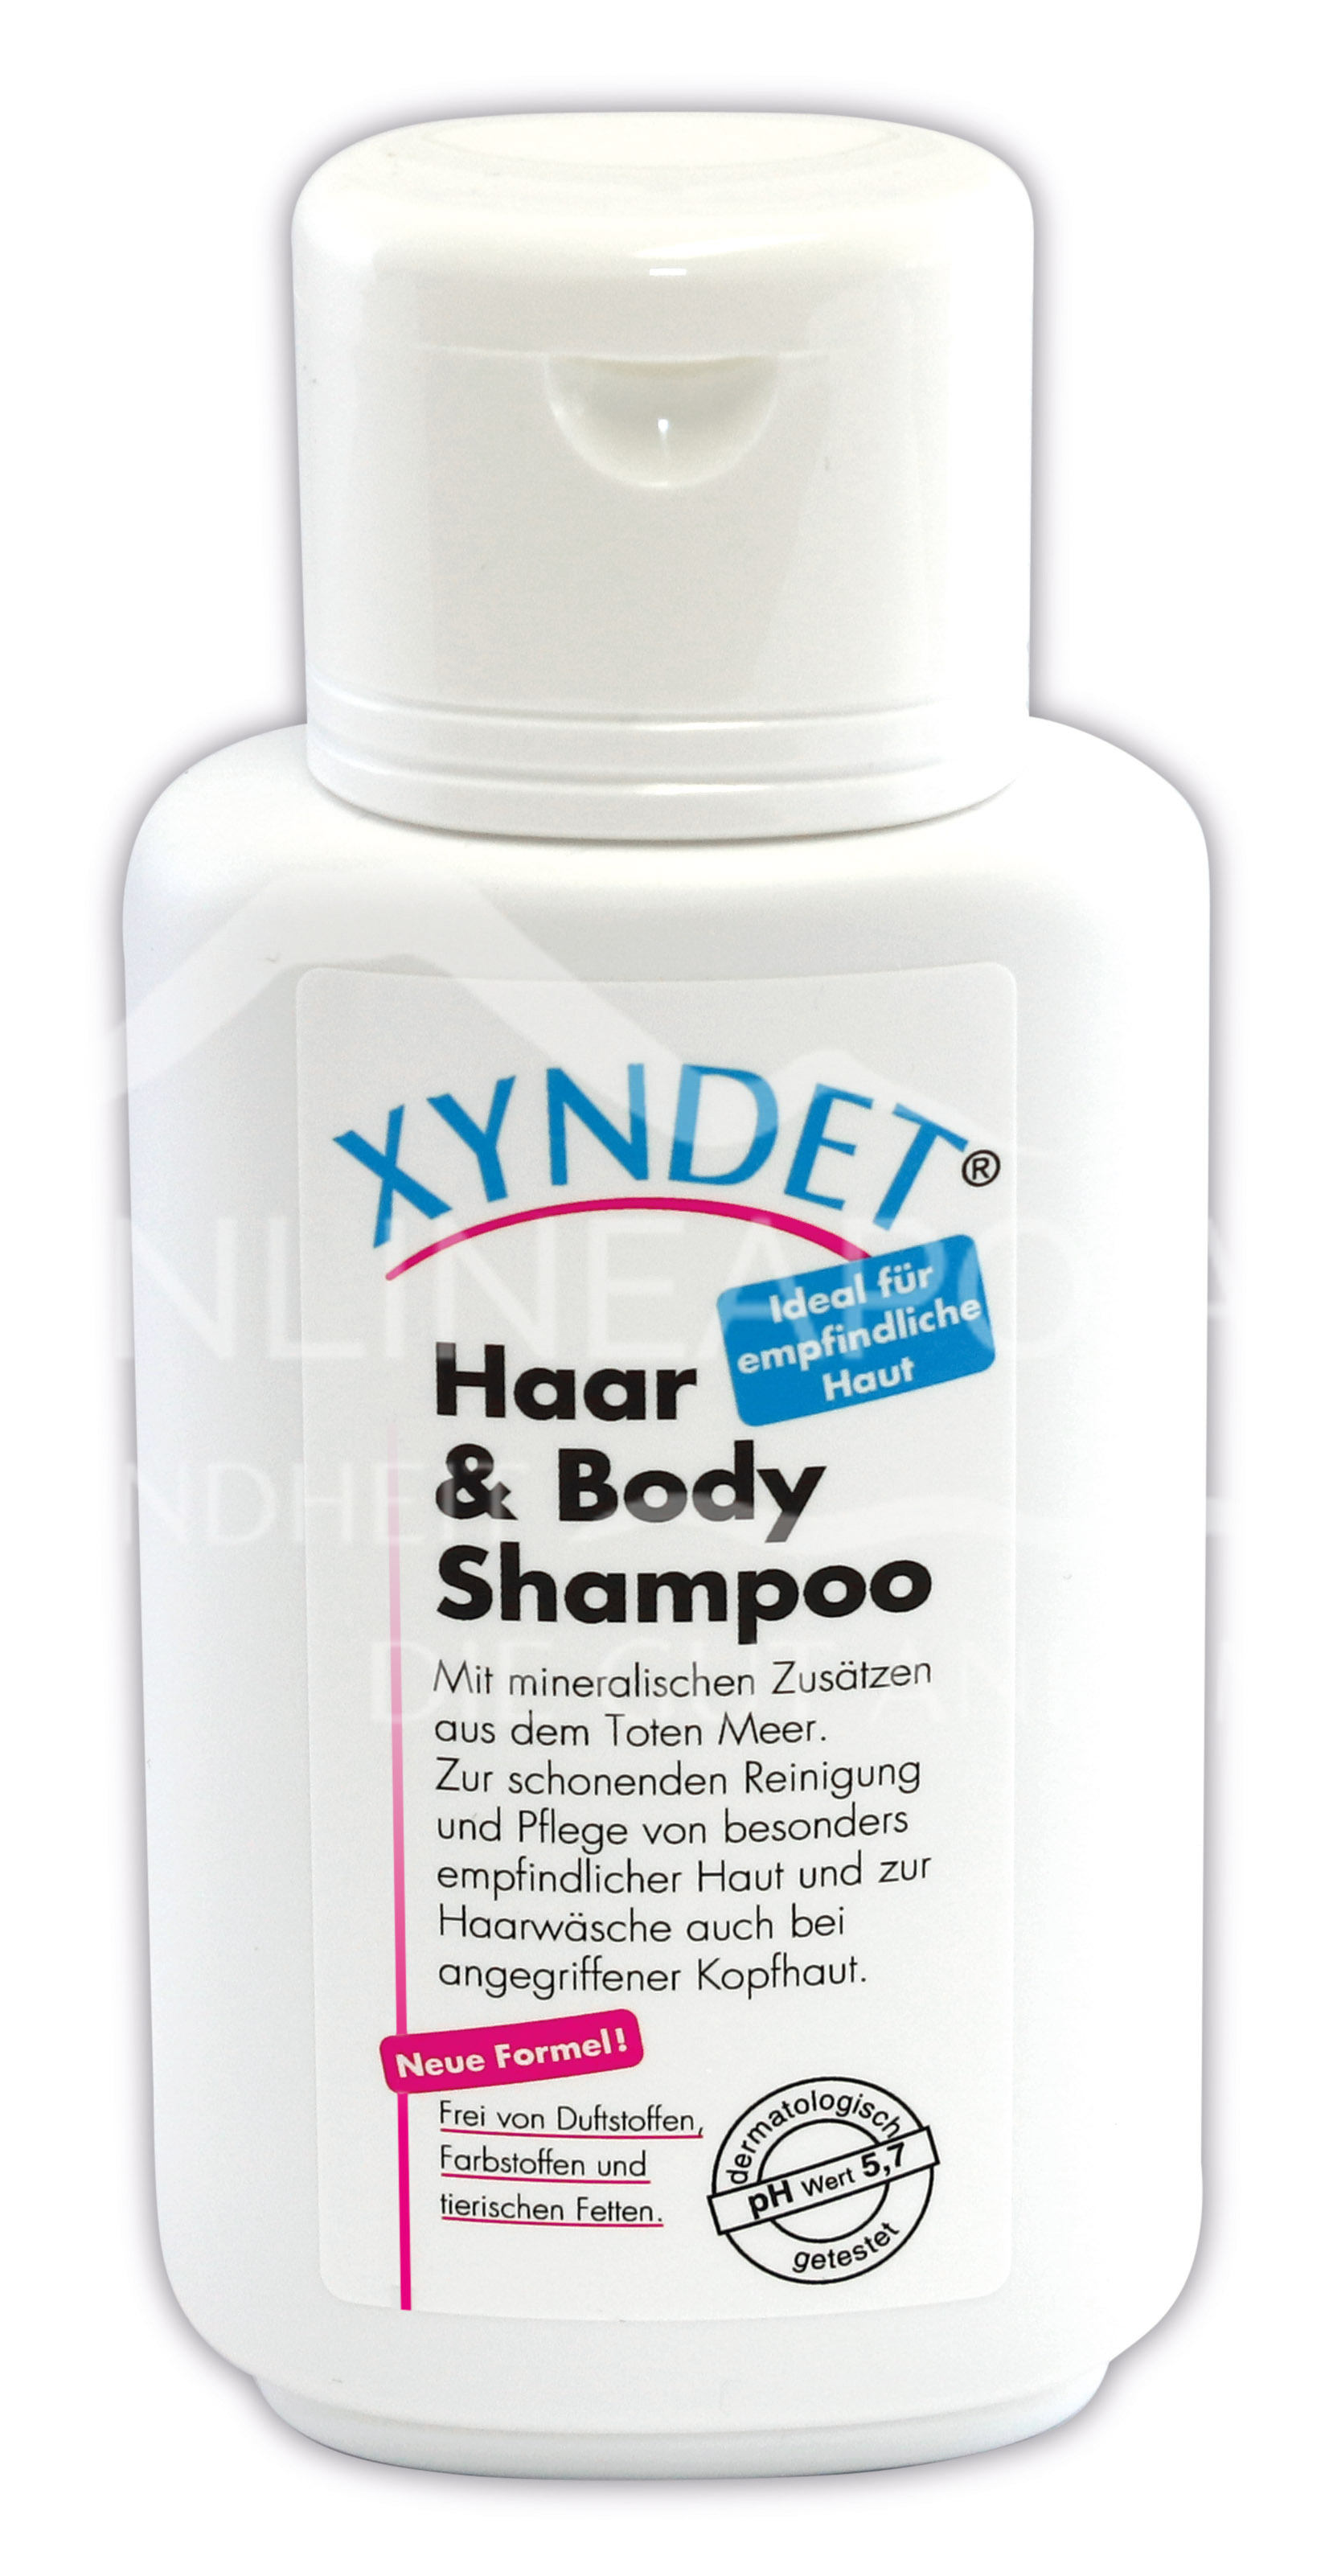 XYNDET Haar & Body Shampoo